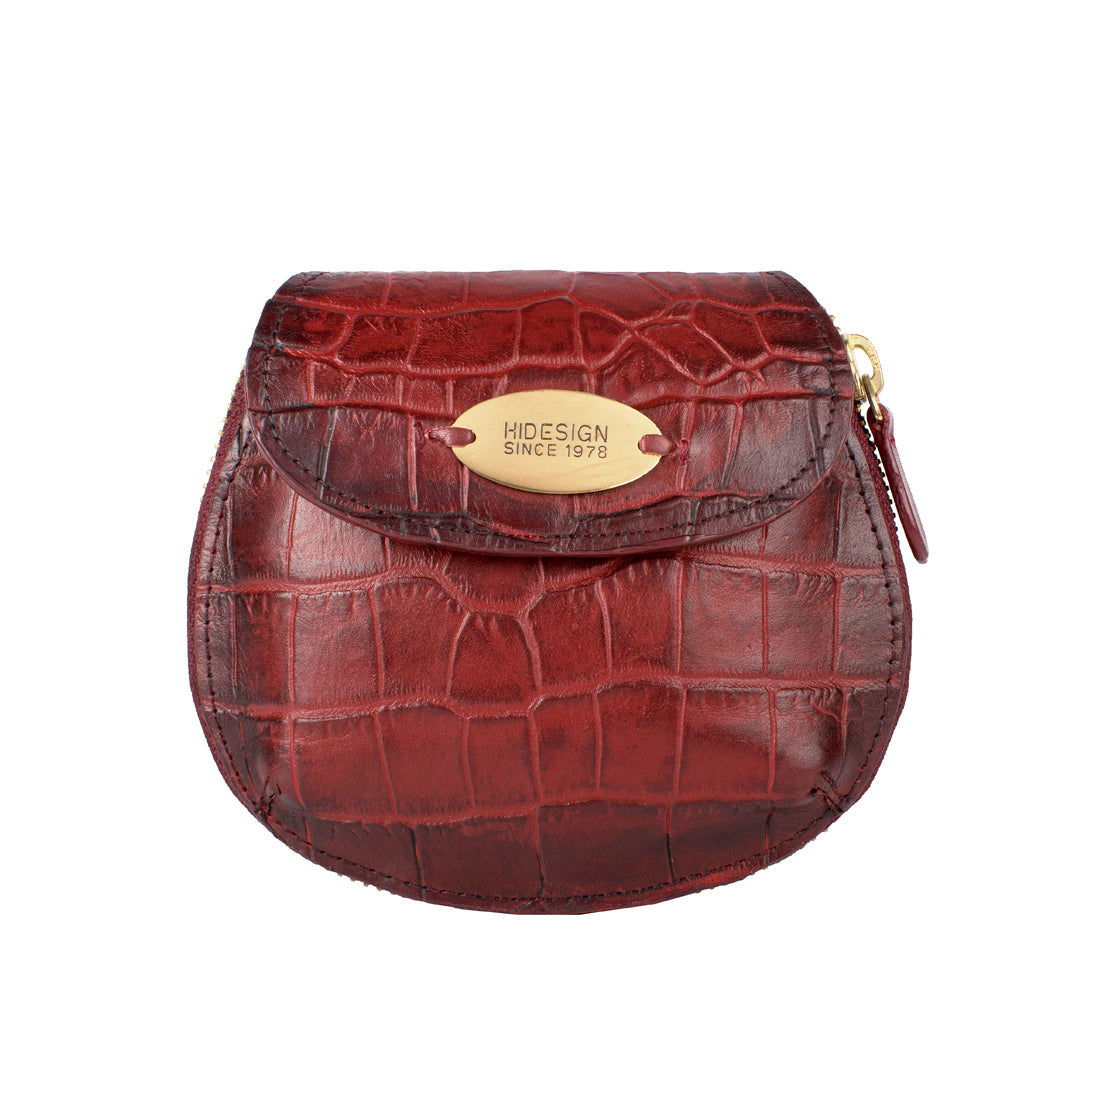 Hidesign Women's Shoulder Bag (Red) : Amazon.in: Fashion